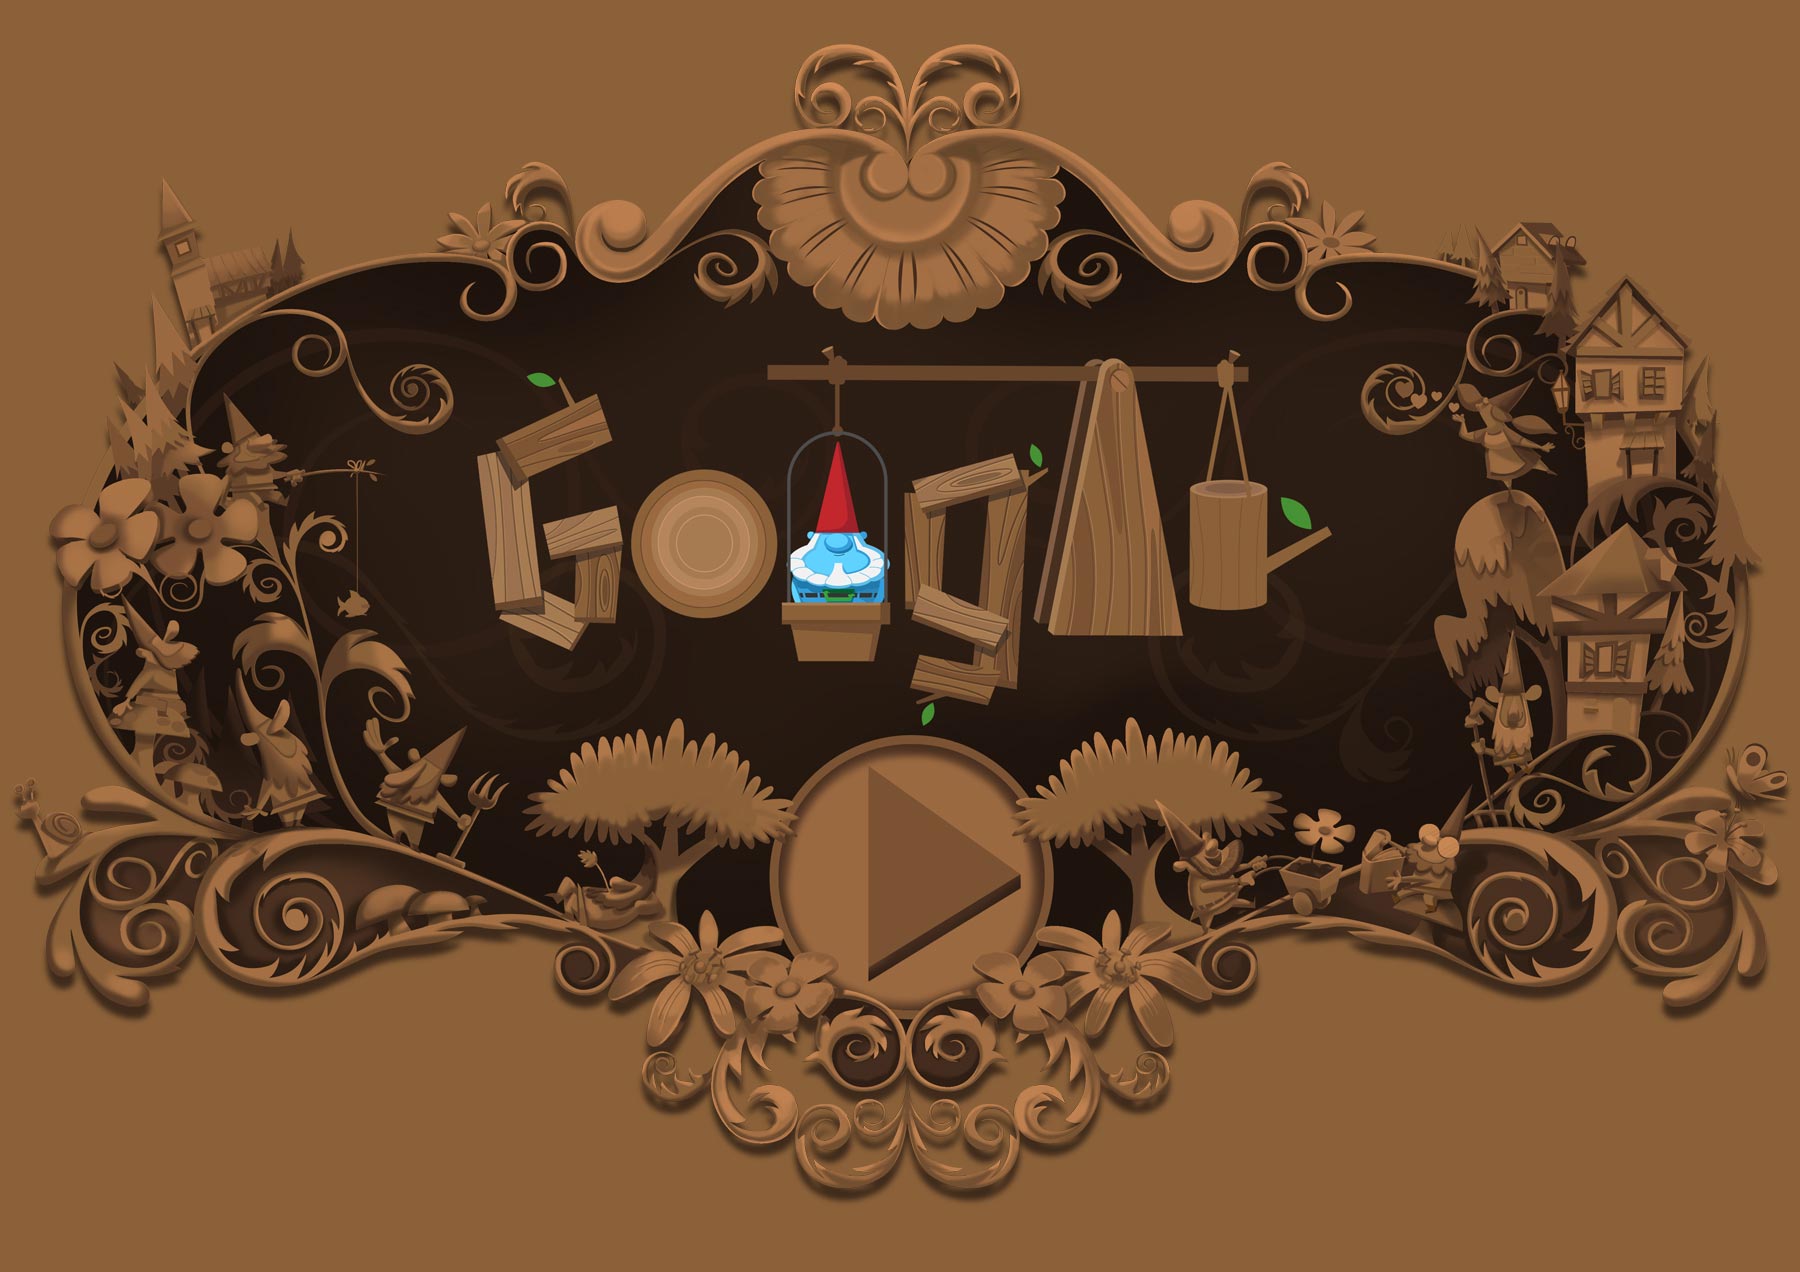 all google doodle games